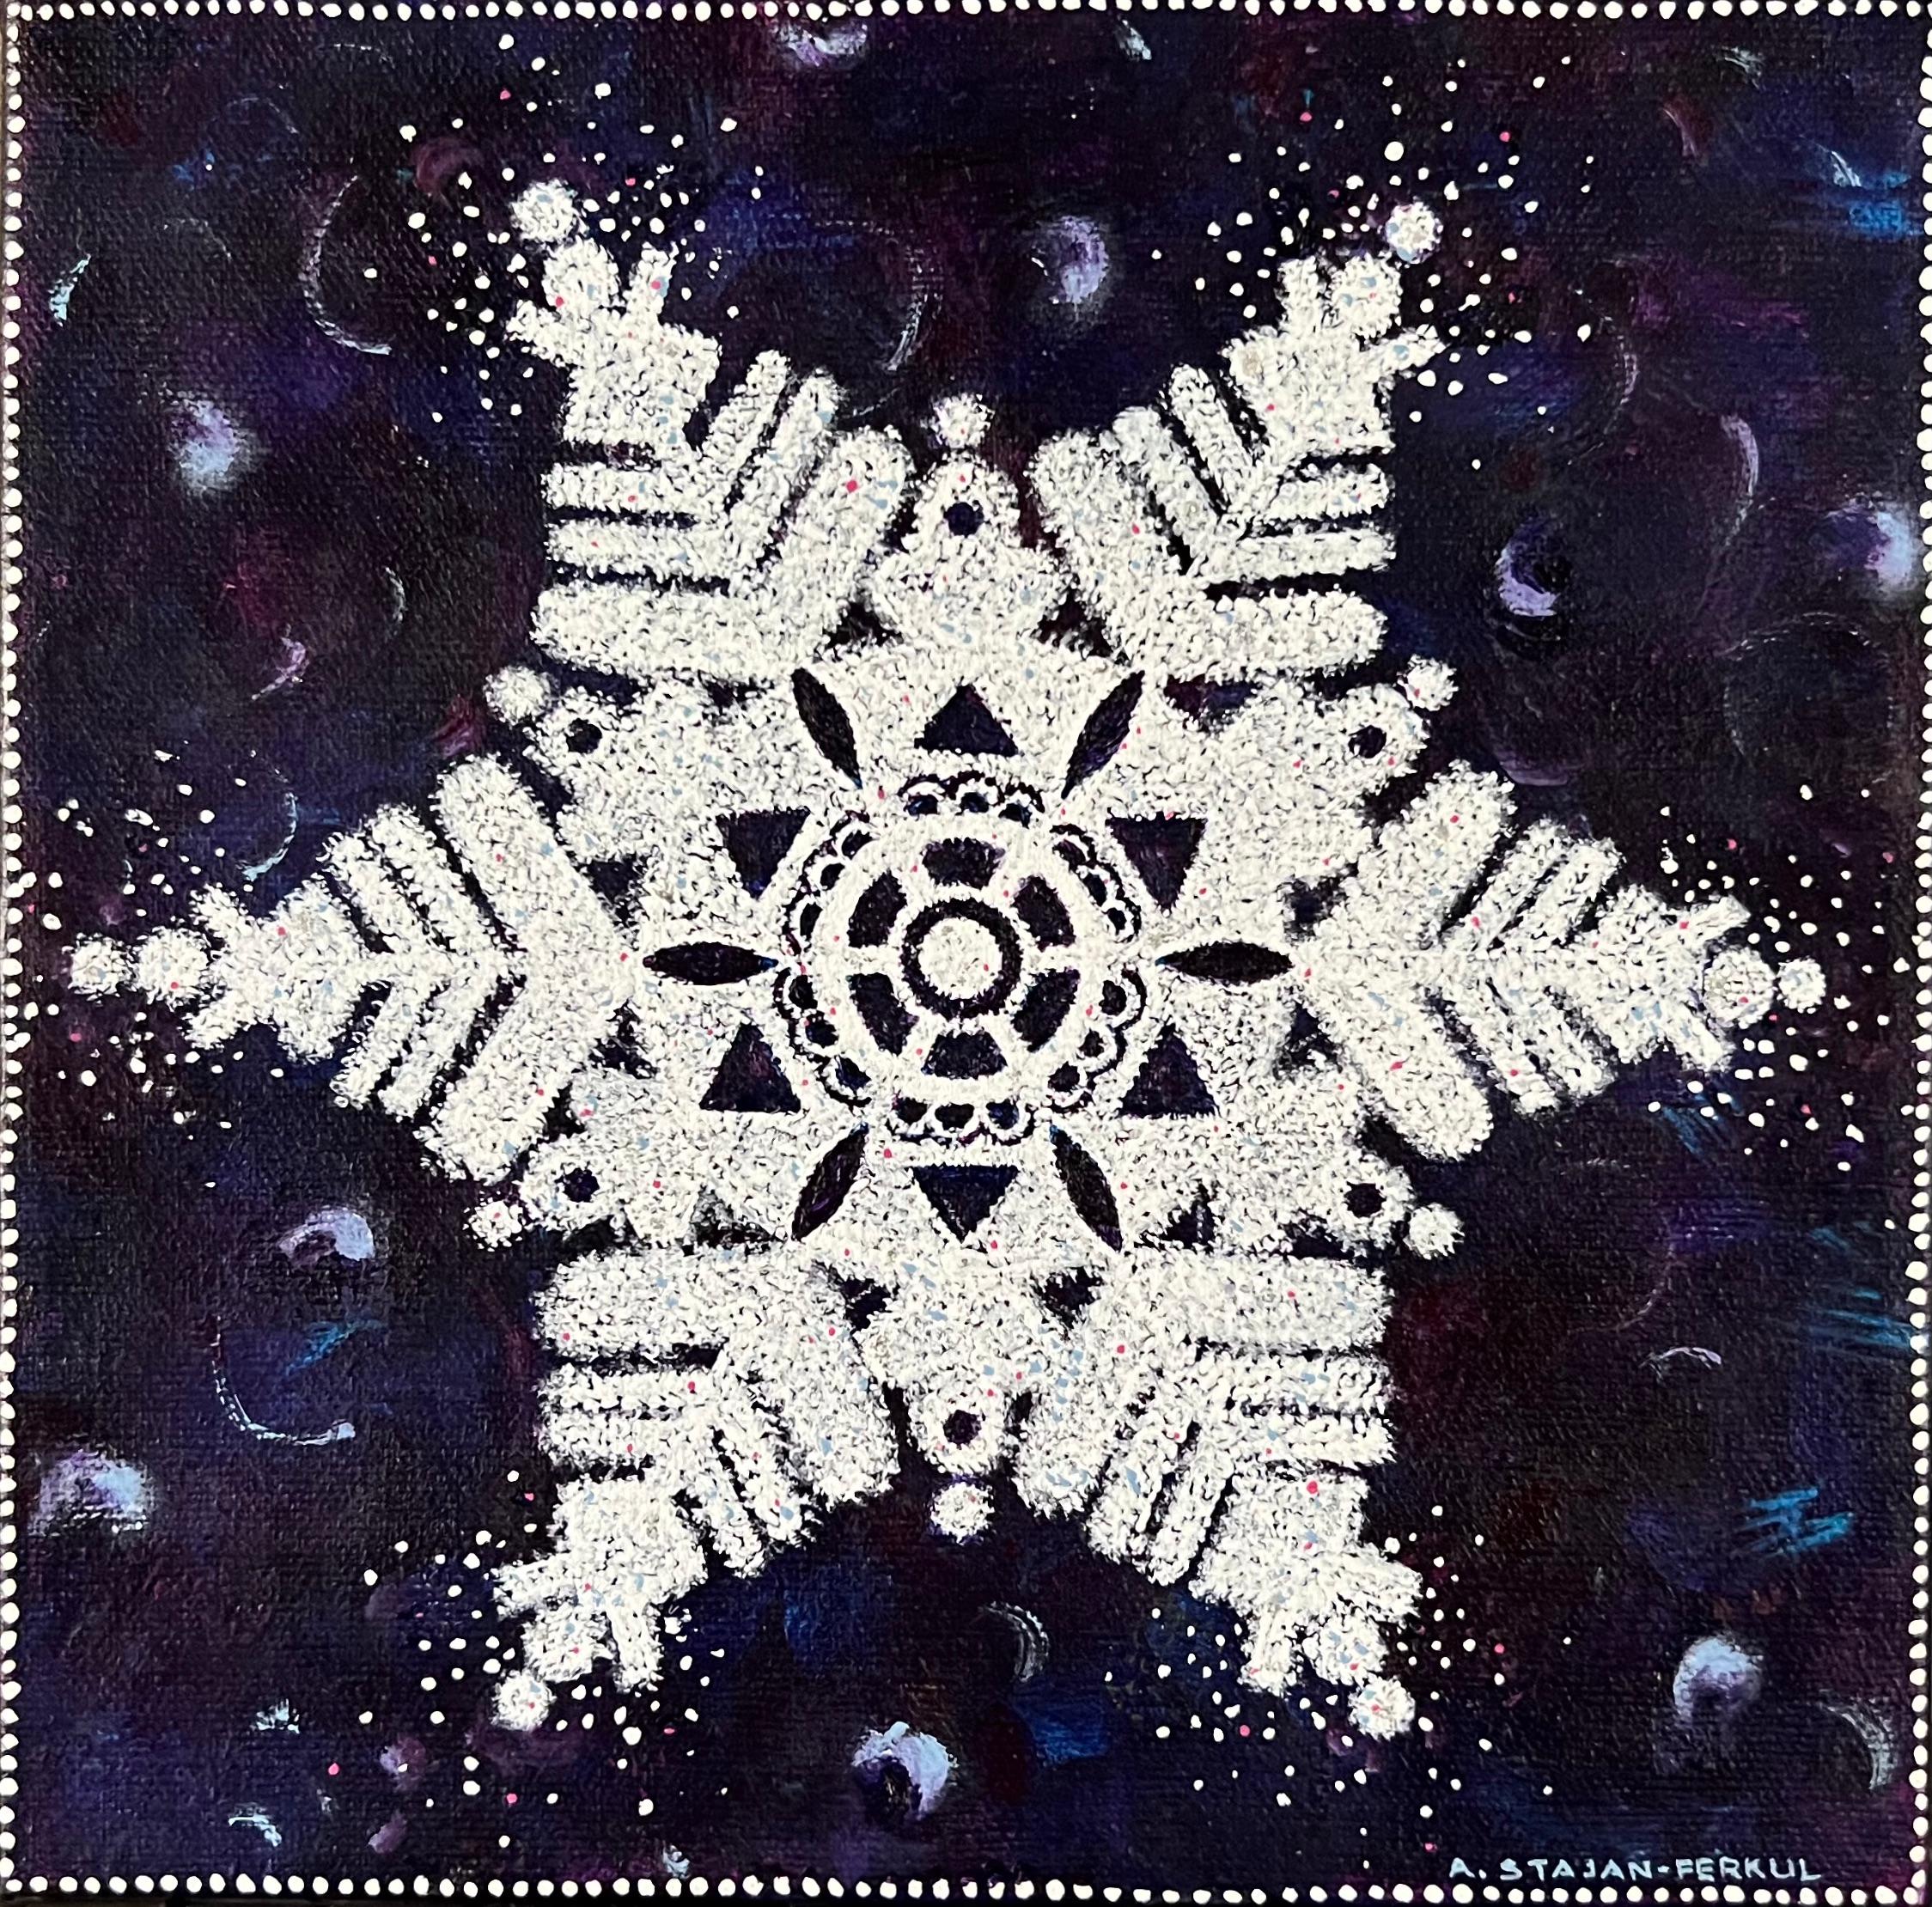 Andrea Stajan-Ferkul Landscape Painting – Schneeflocke im Himmel, 8"x8", Blau, Weiß, Winter, Schnee, Stern, Weihnachtsgemälde